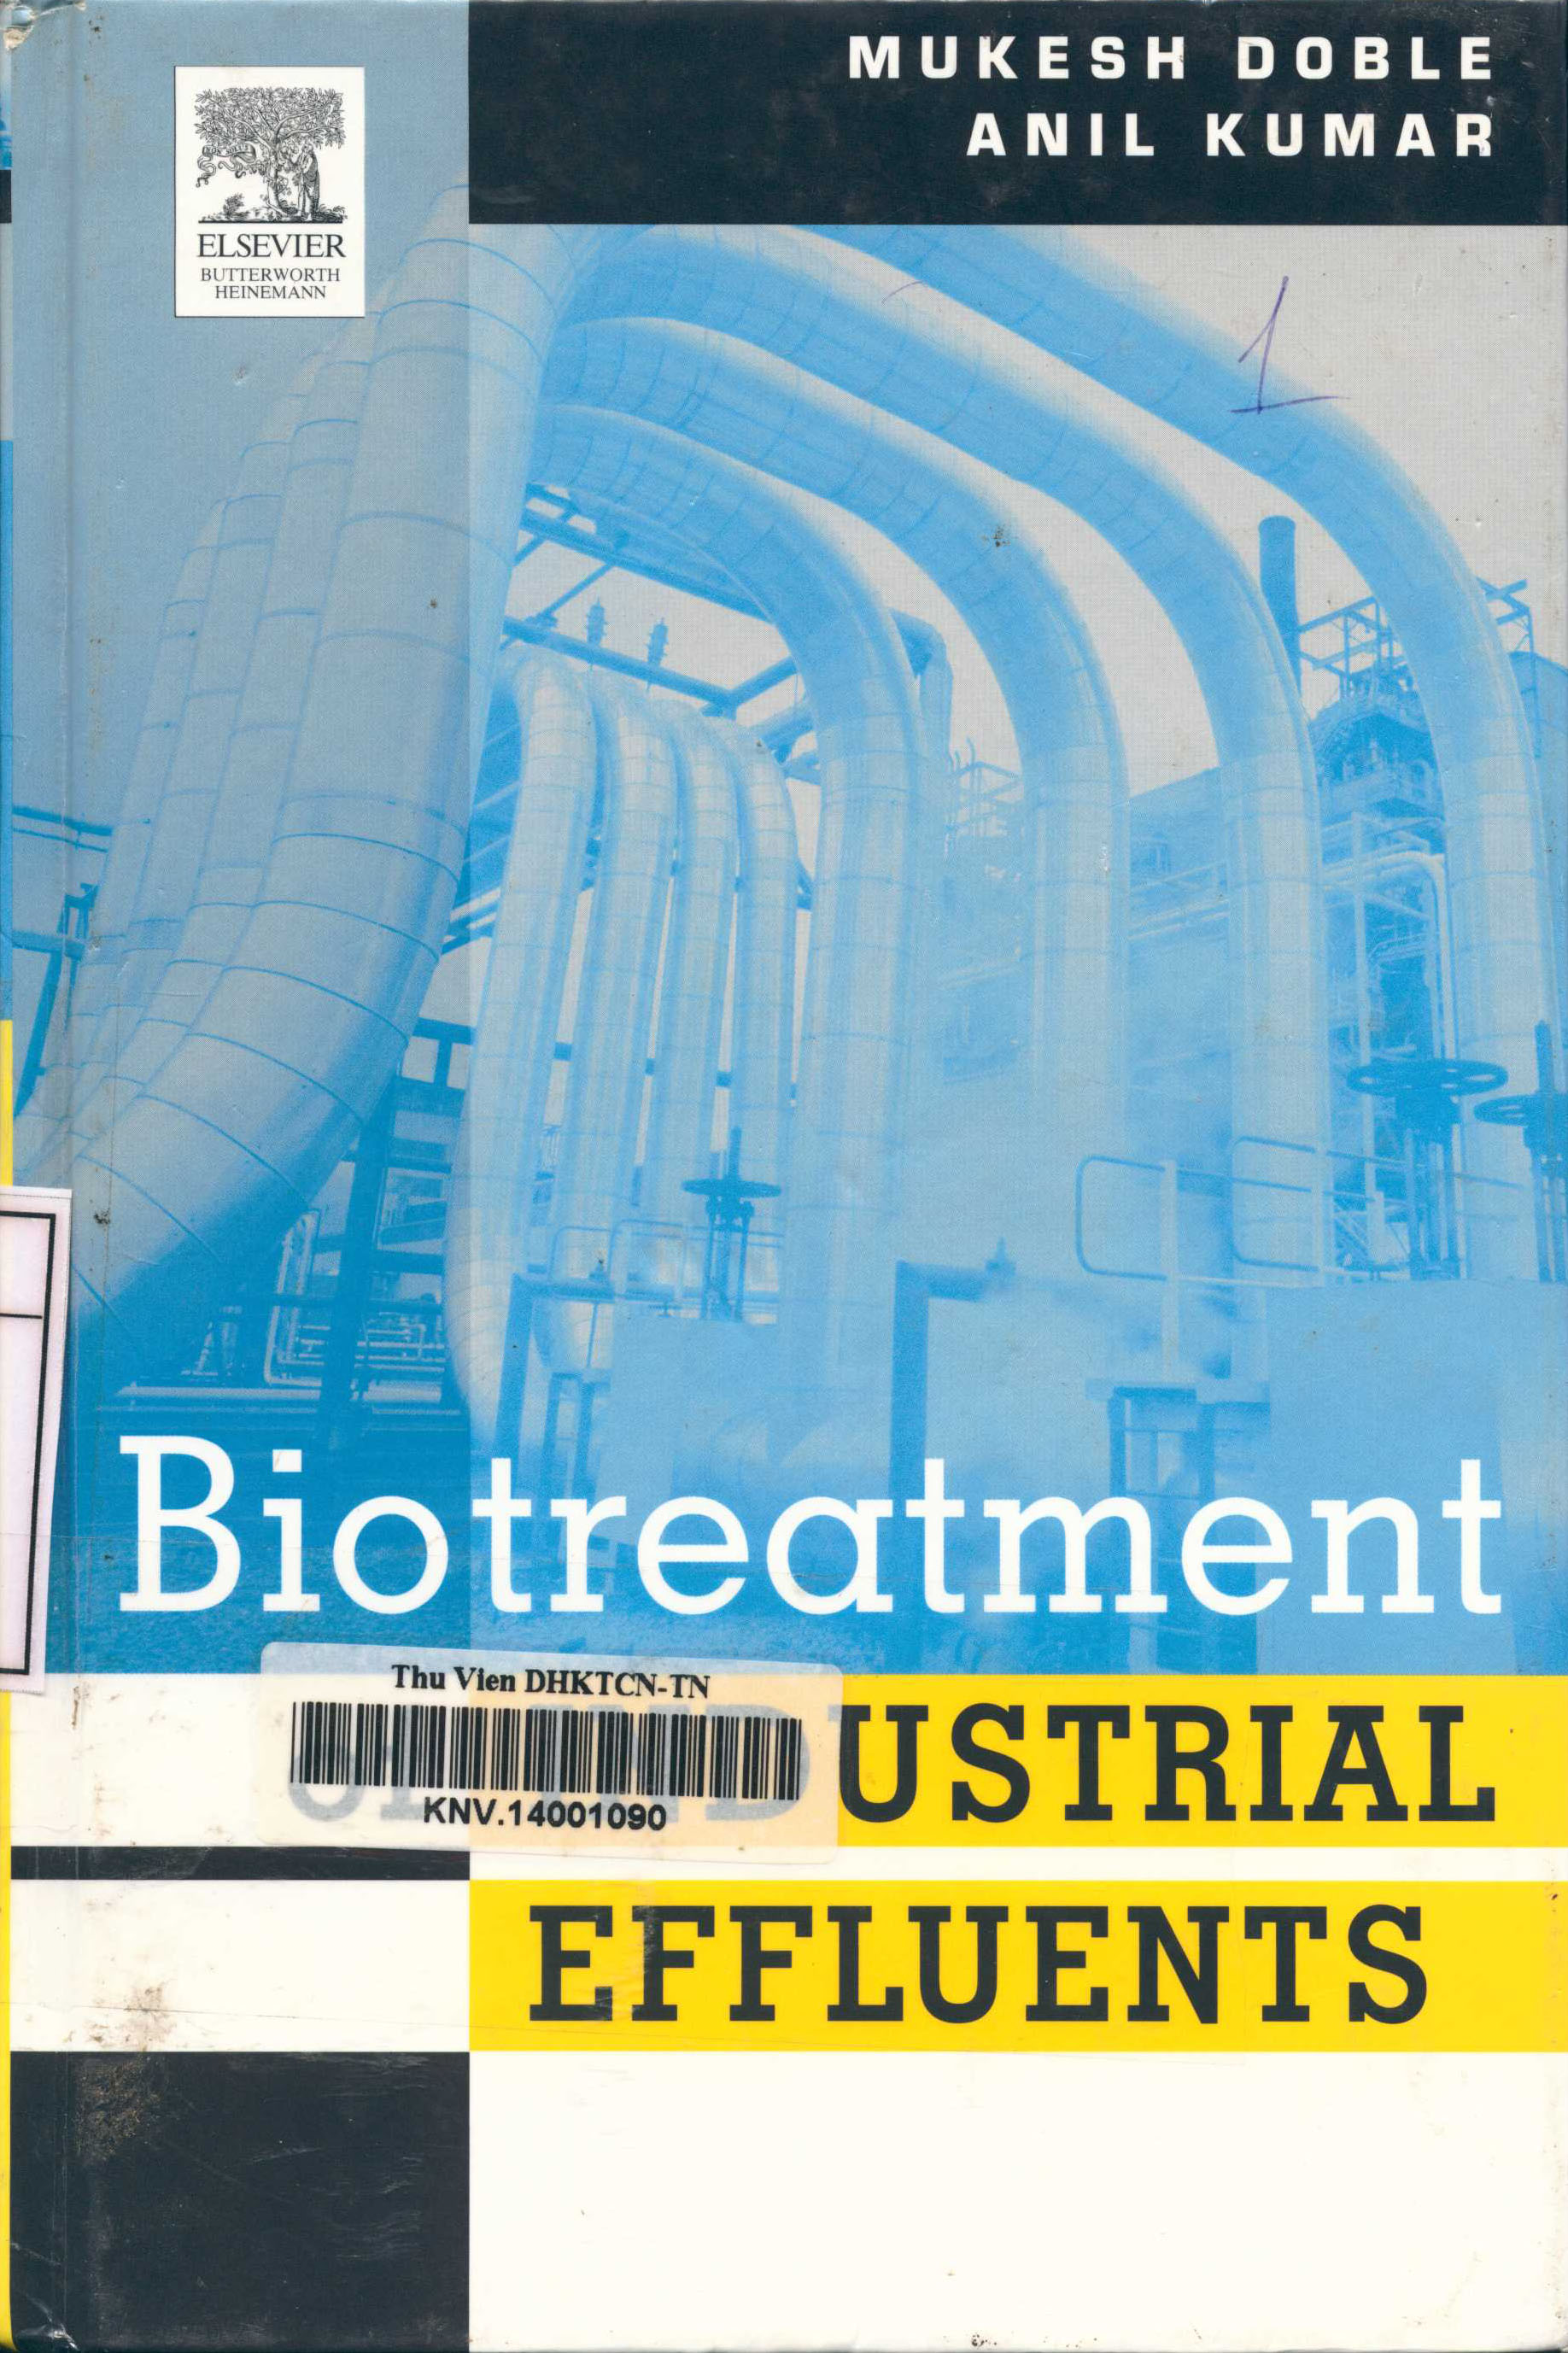 Biotreatment of industrial effluents